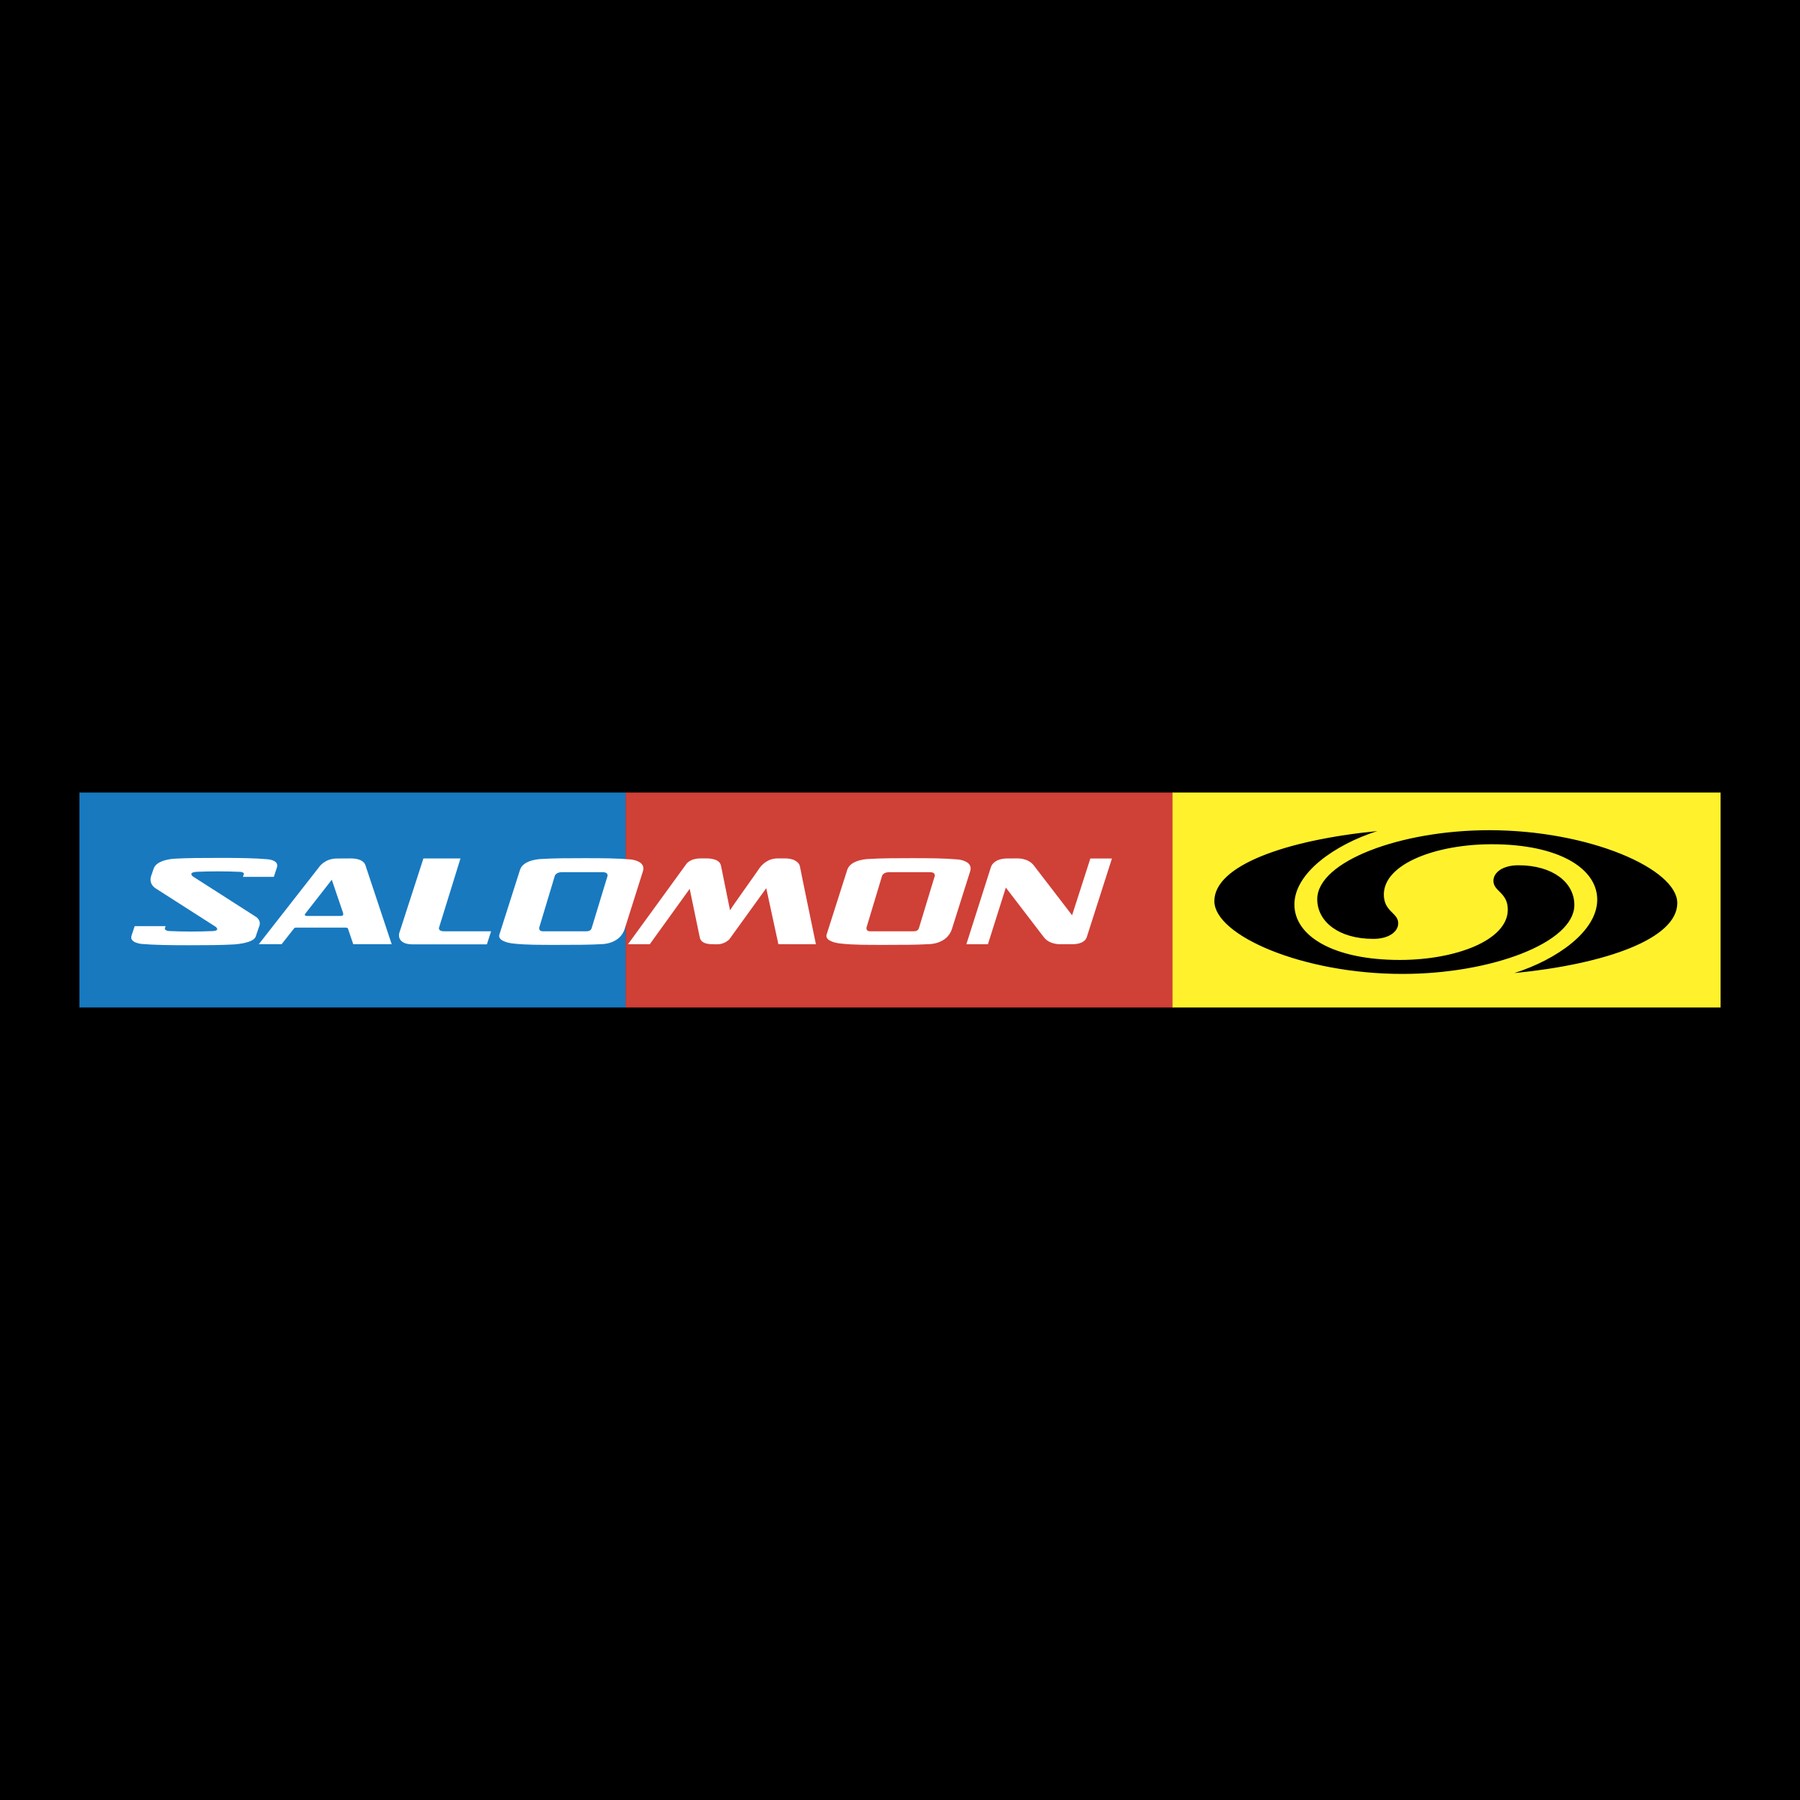 salomon-1-logo-png-transparent.png